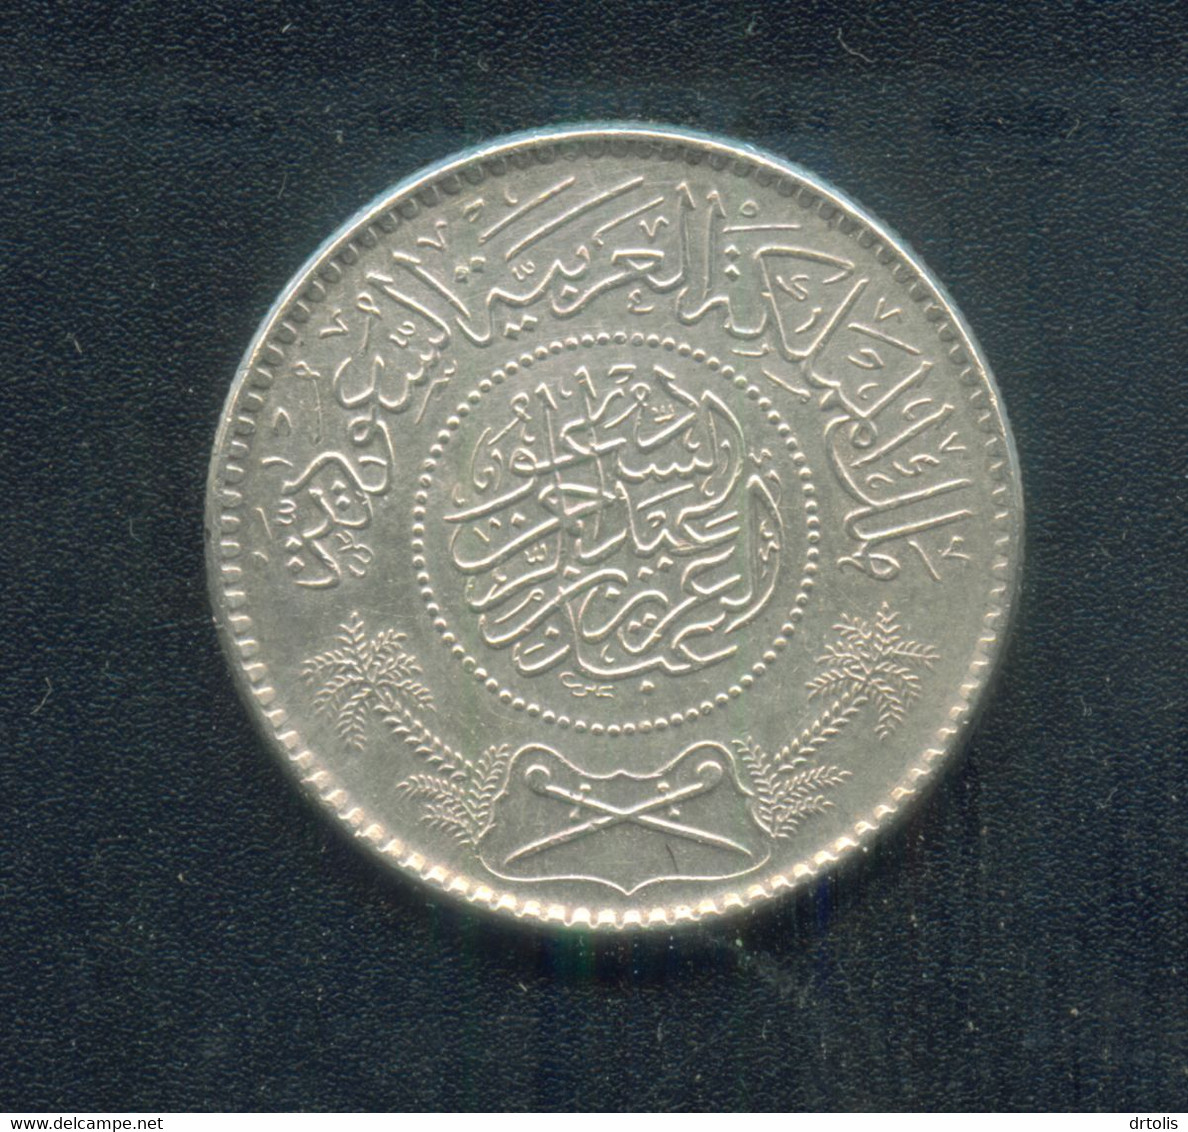 SAUDI ARABIA / 1354 / ONE RIAL / SILVER COIN / KING ABDULLAZIZ - Saudi Arabia